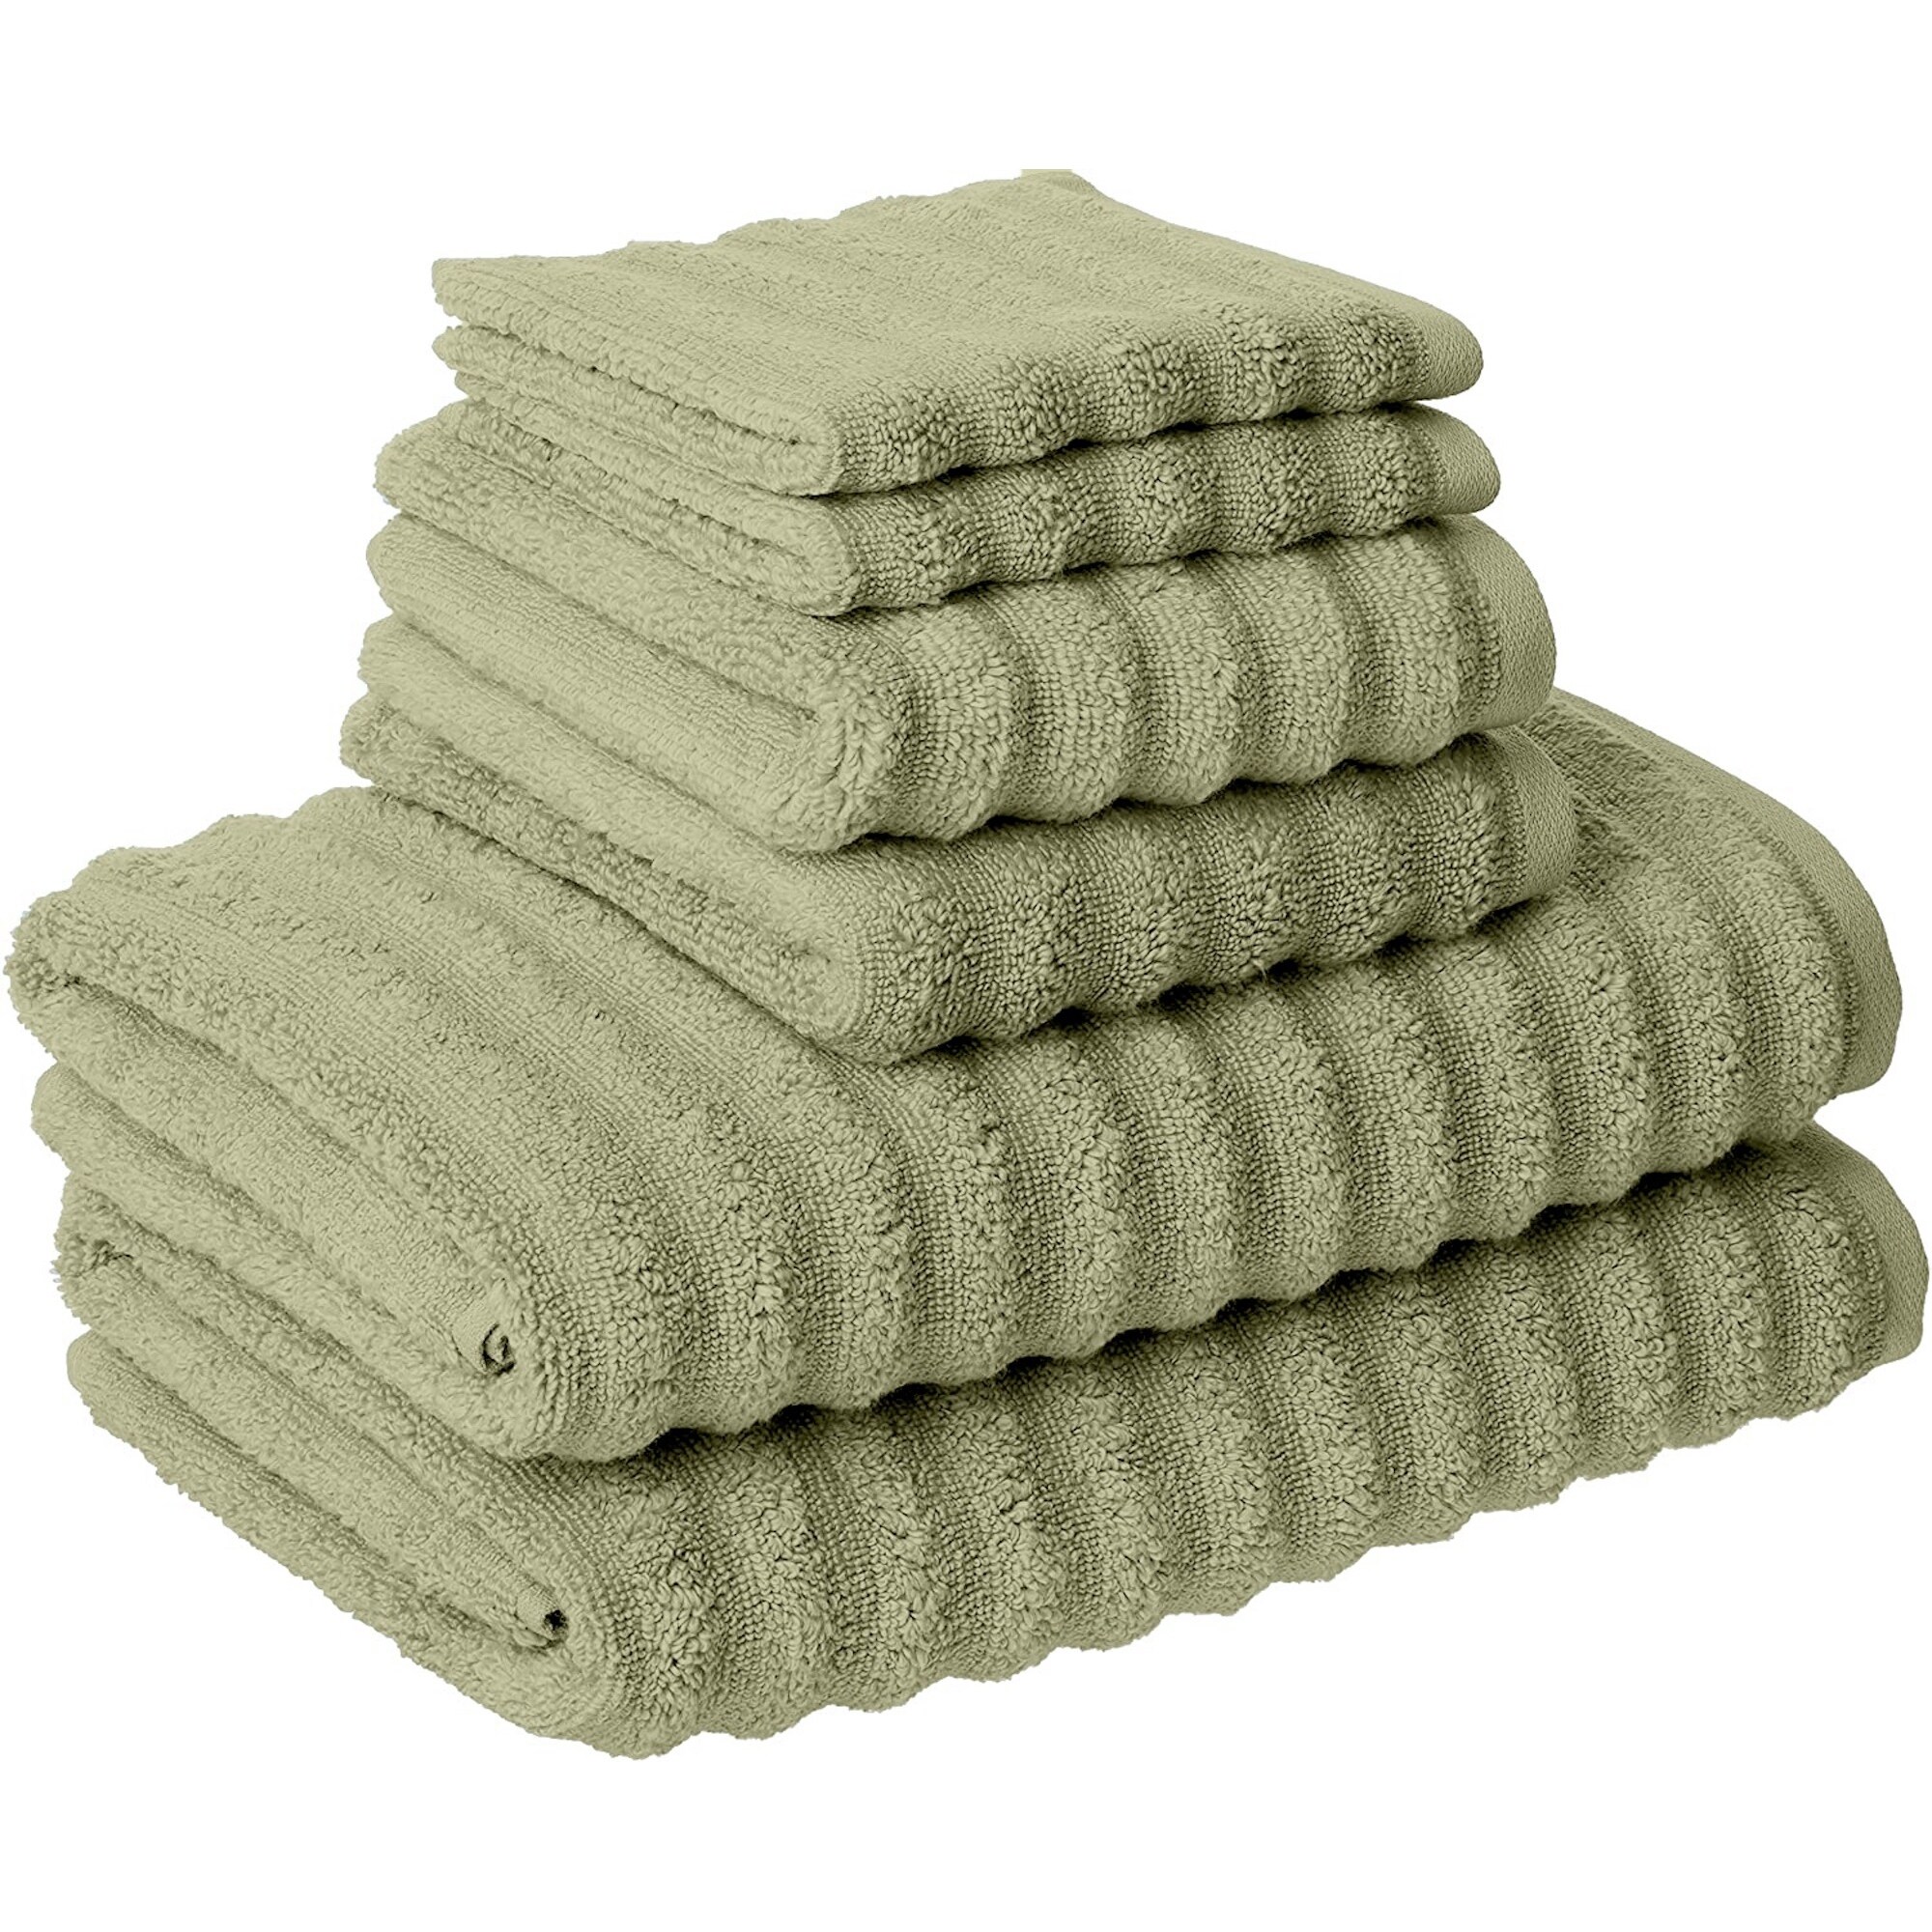 Modern Threads Wavy Luxury Spa 6-pc. Quick-dry Towel Set - On Sale